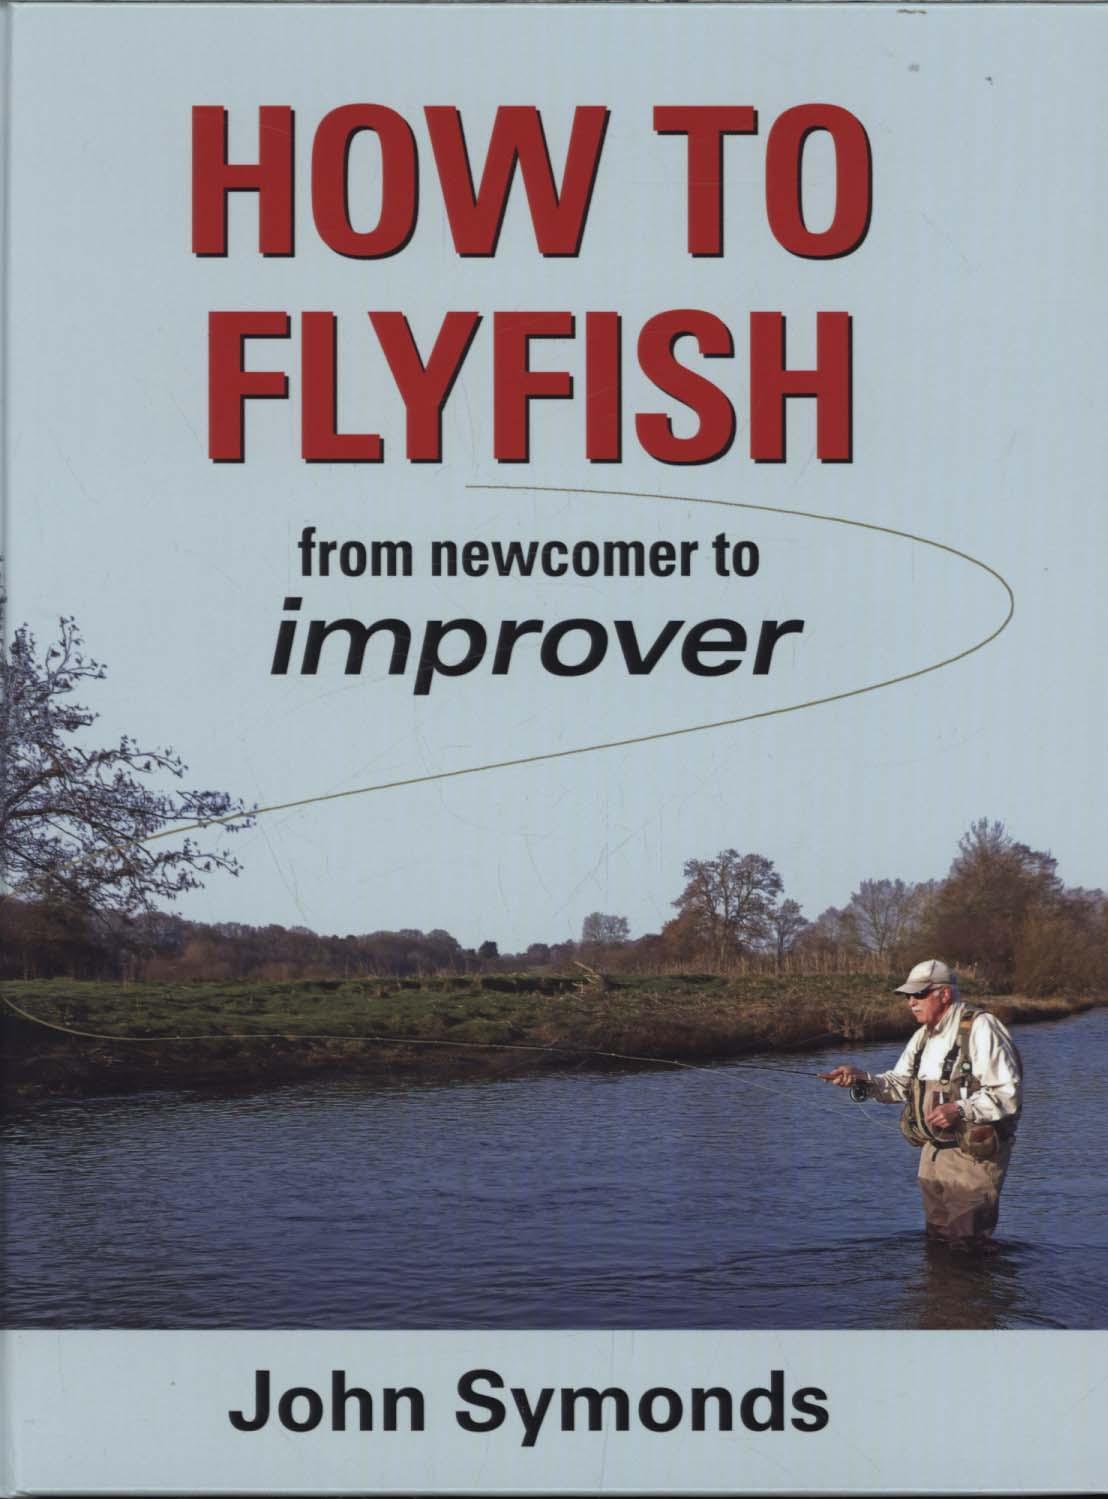 How to Flyfish - John Symonds